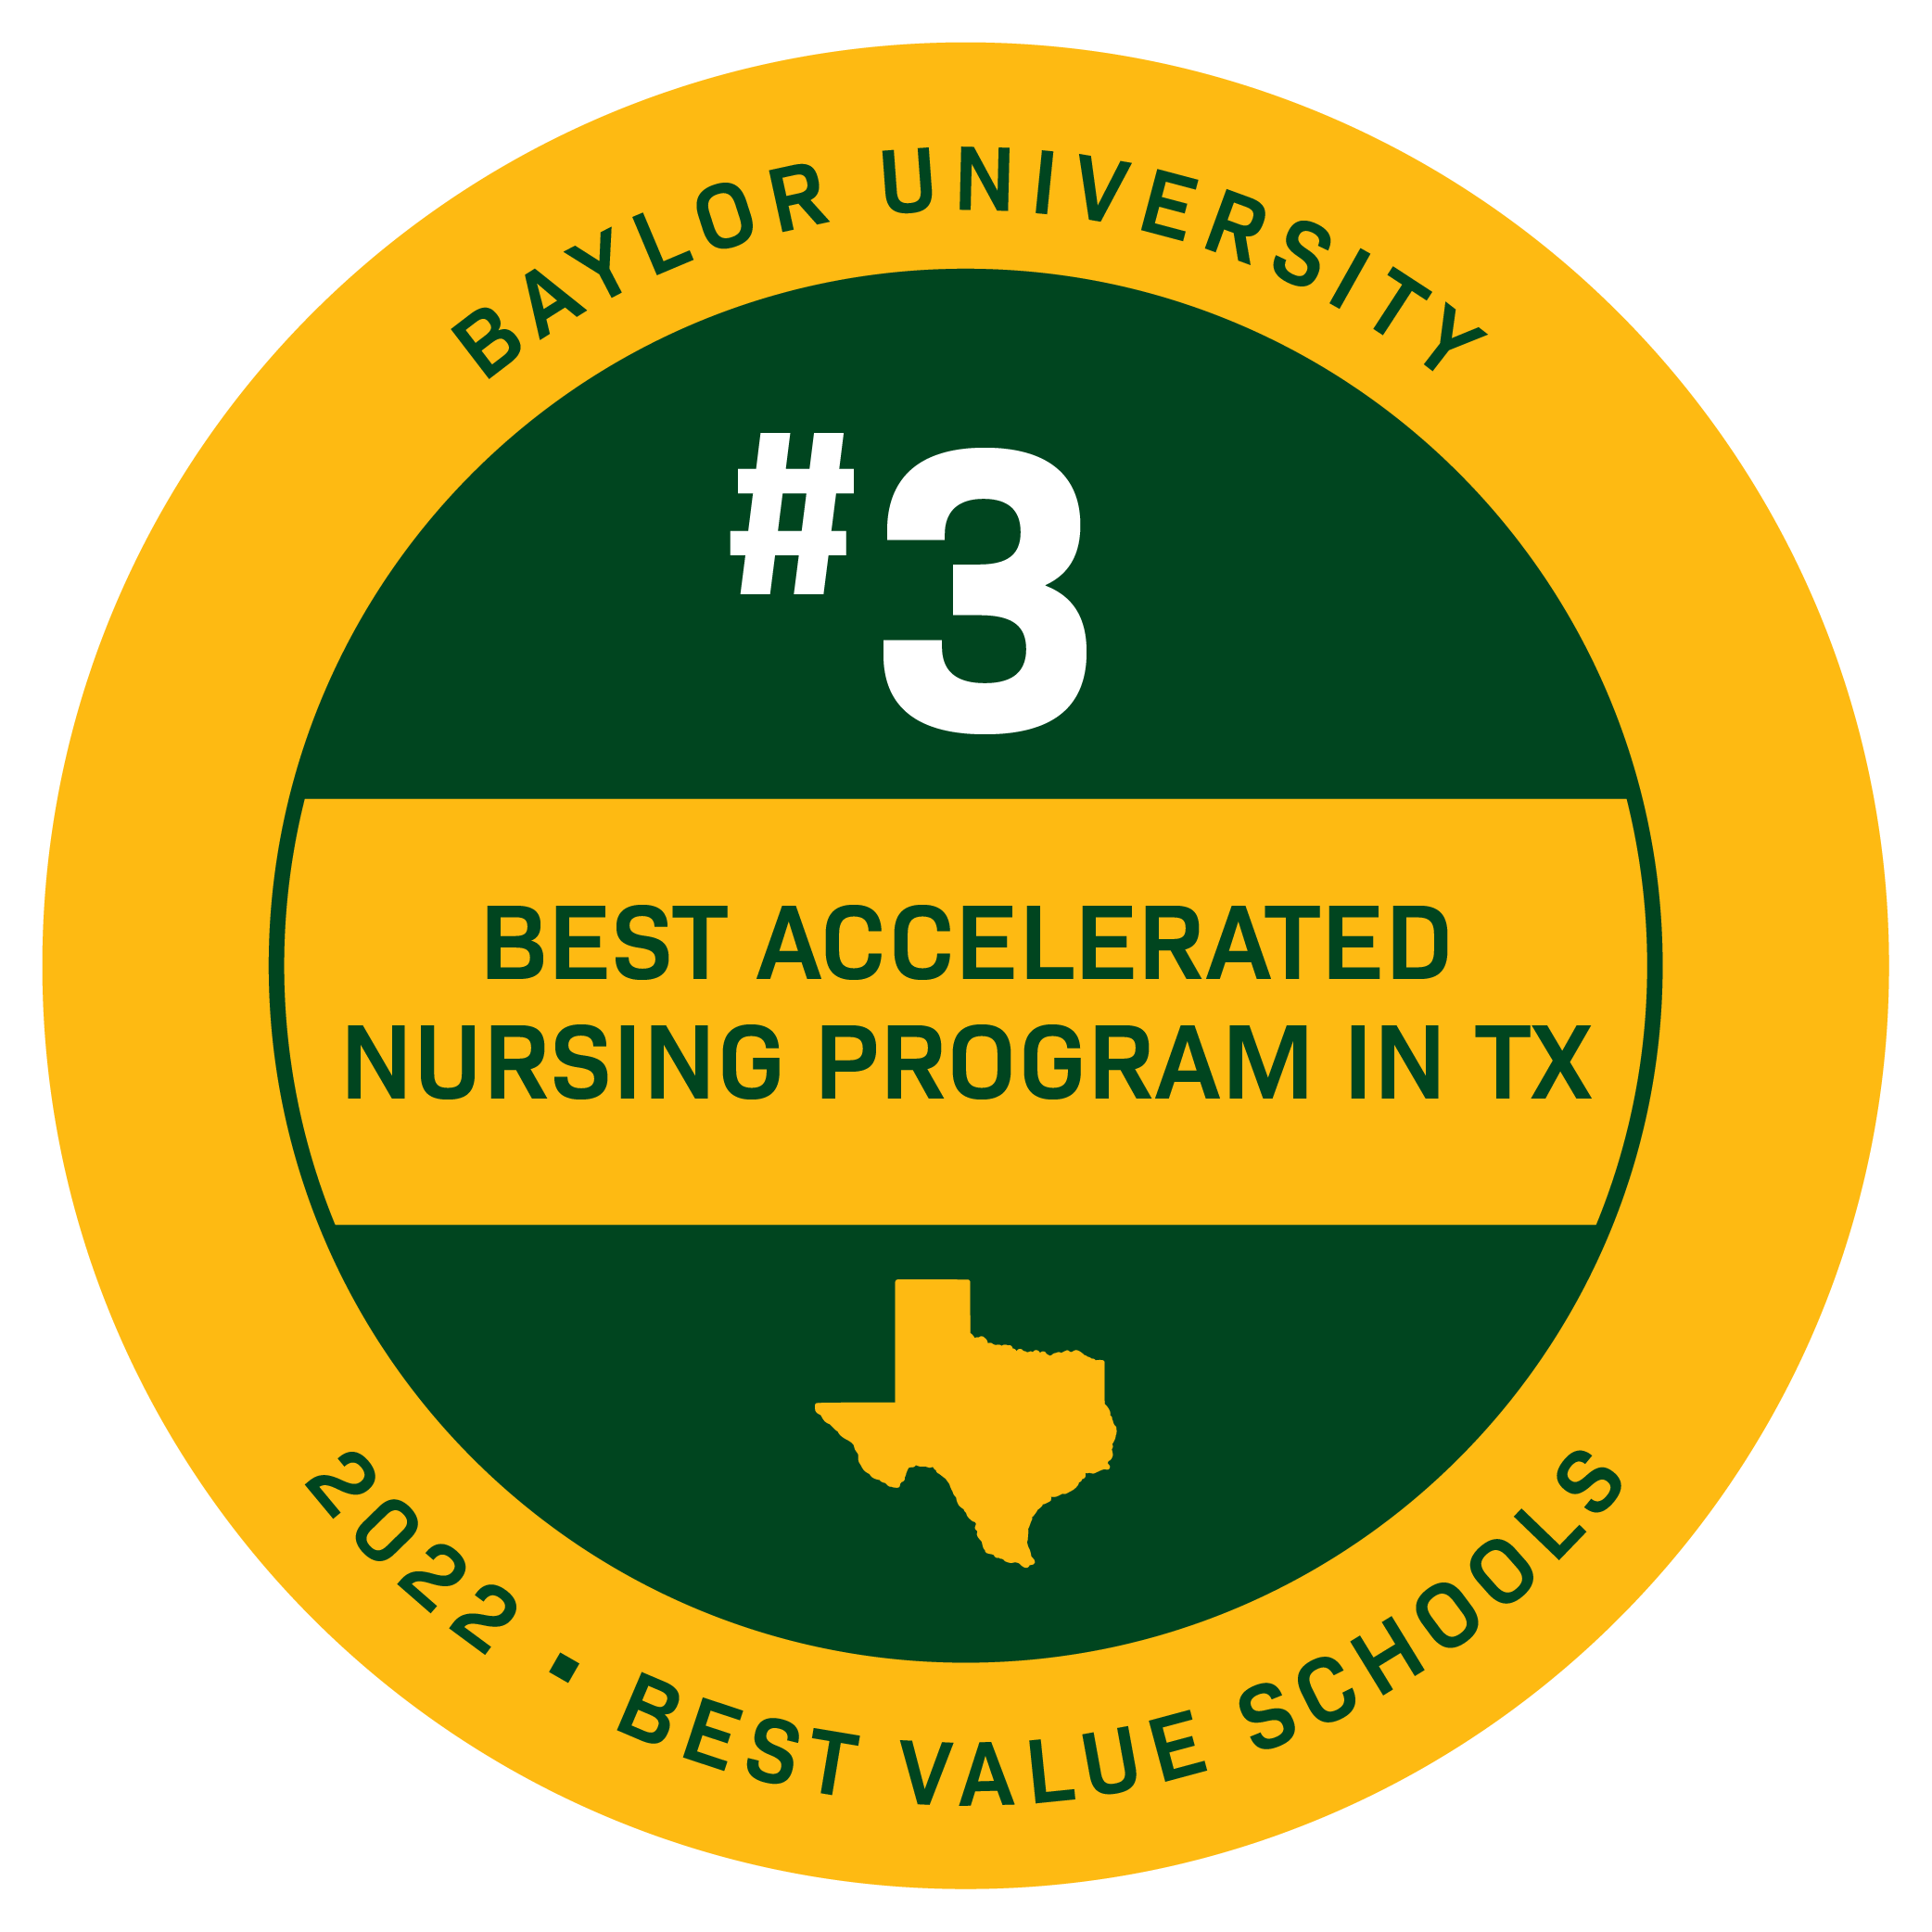 #3 best accelerated nursing program in Texas